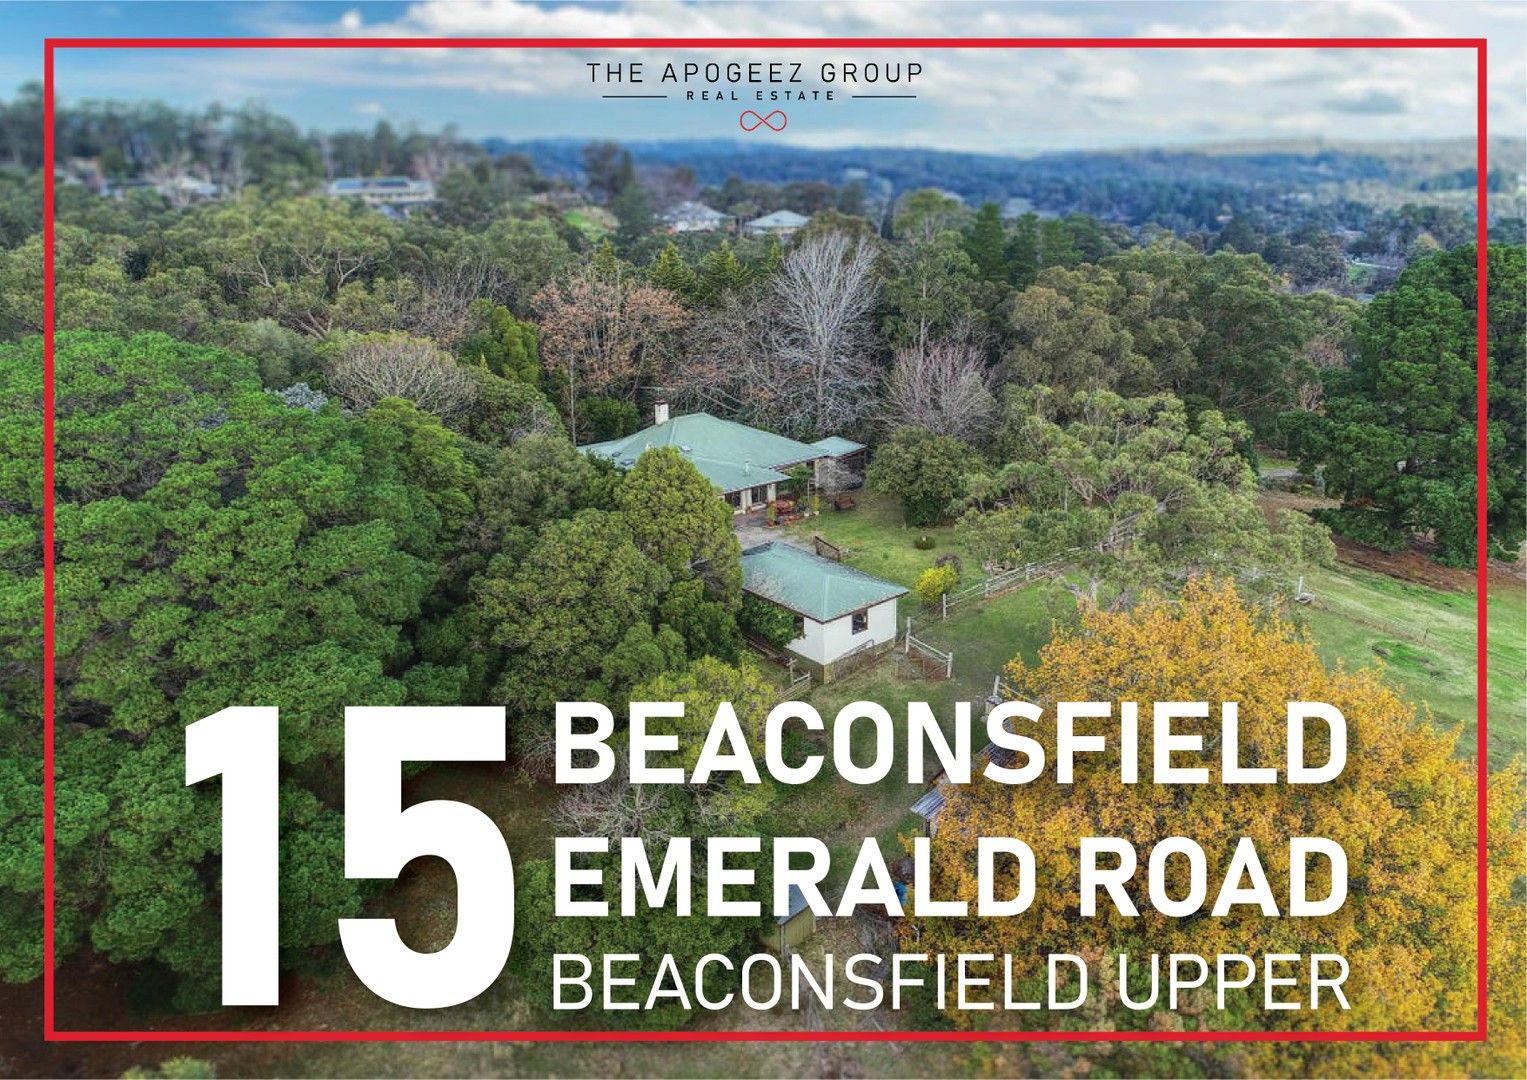 3 bedrooms Acreage / Semi-Rural in 15 Beaconsfield Emerald Rd BEACONSFIELD UPPER VIC, 3808